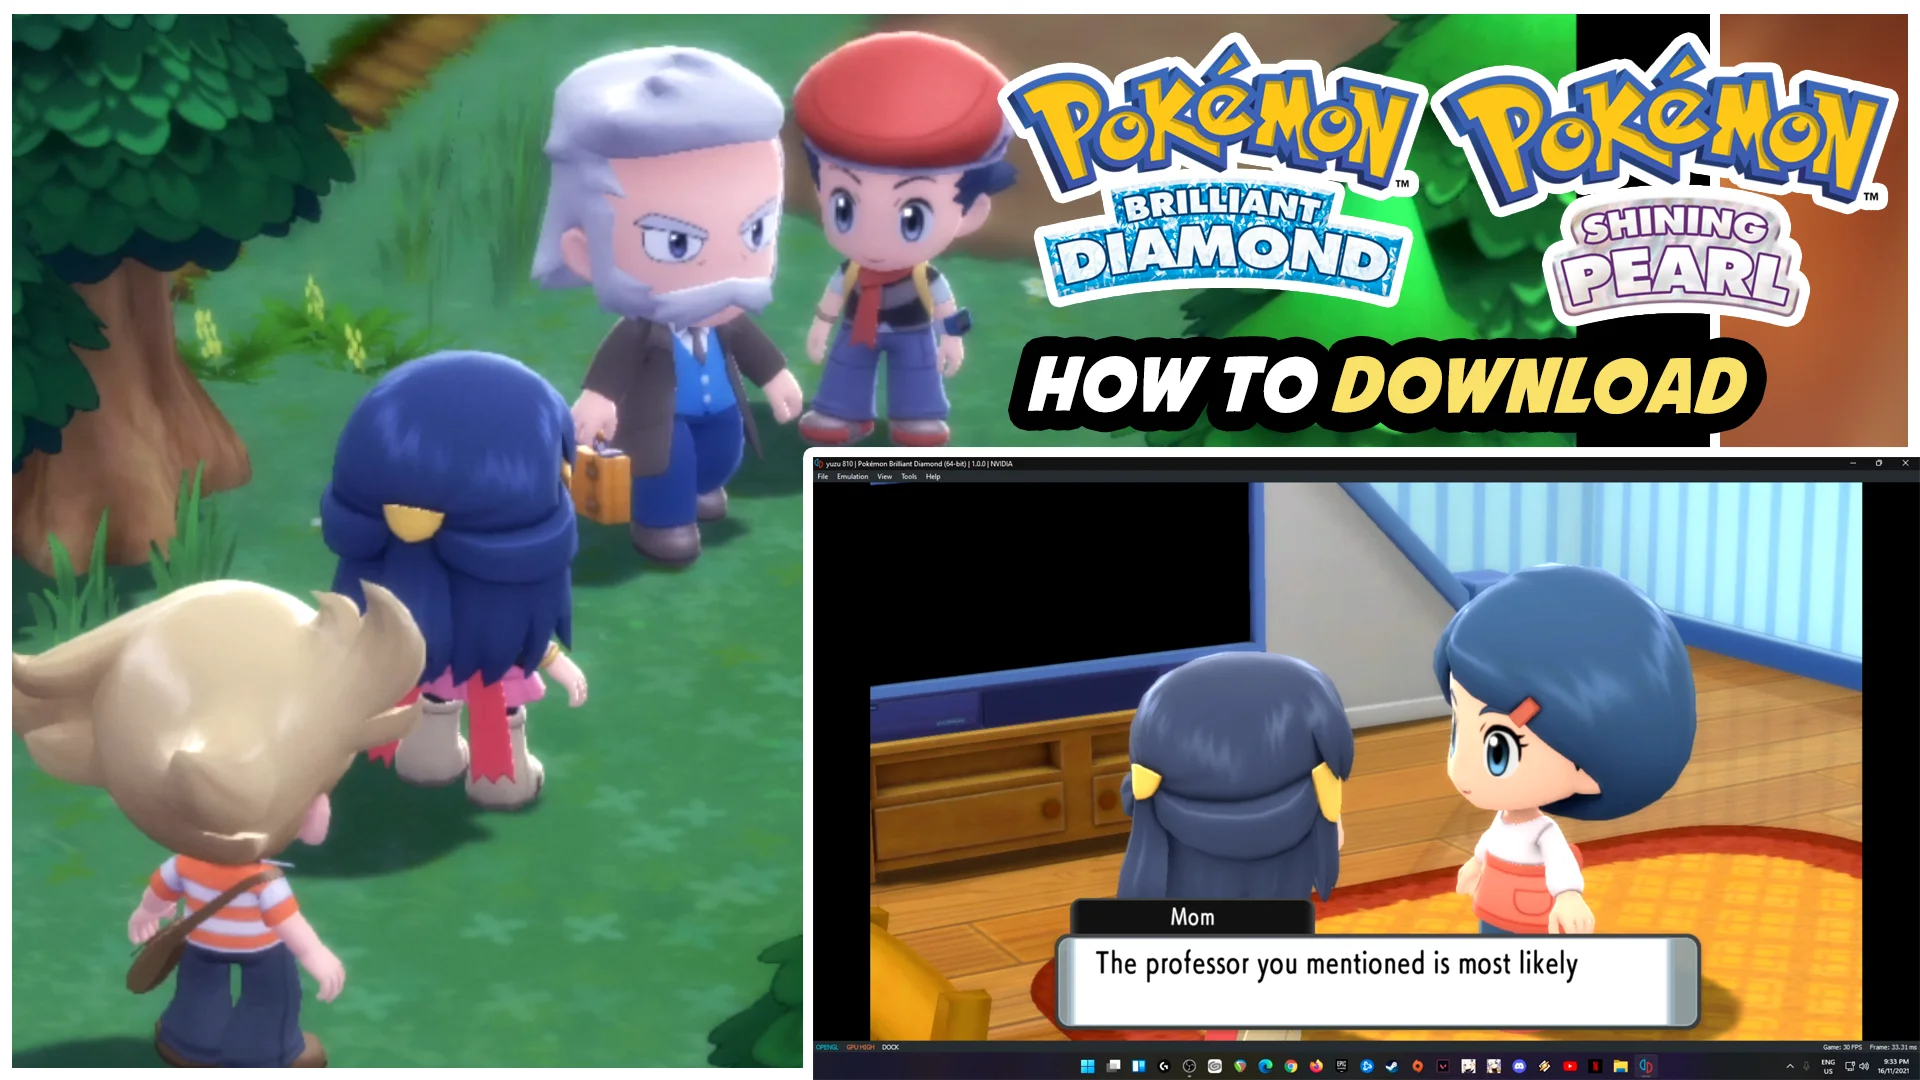 Download Pokemon Brilliant Diamond Shining Pearl Official XCI ROM for PC on  Vimeo